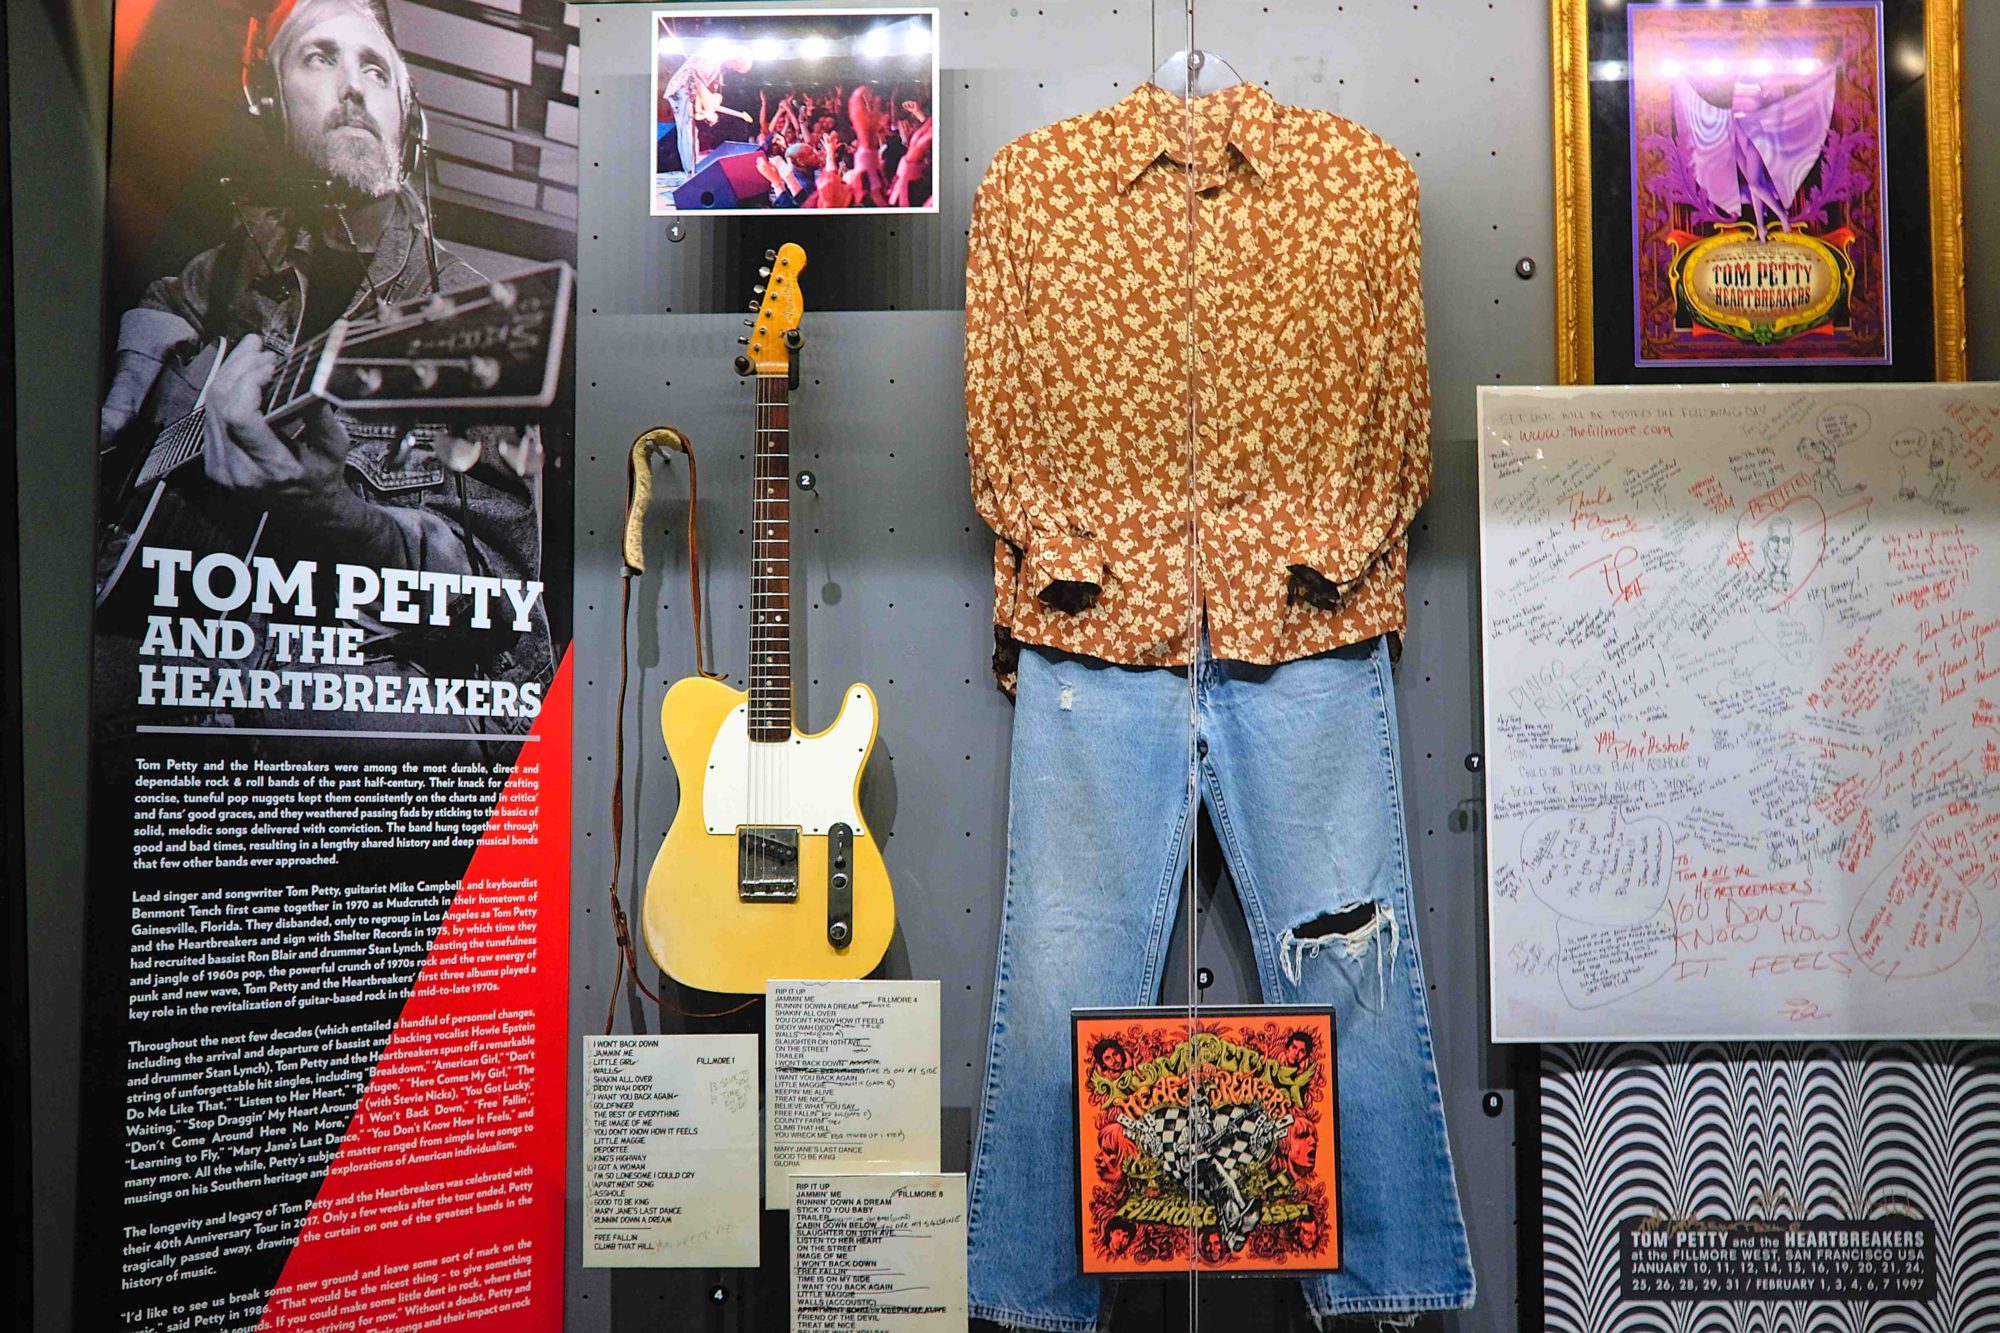 A display of Tom Petty memorabilia